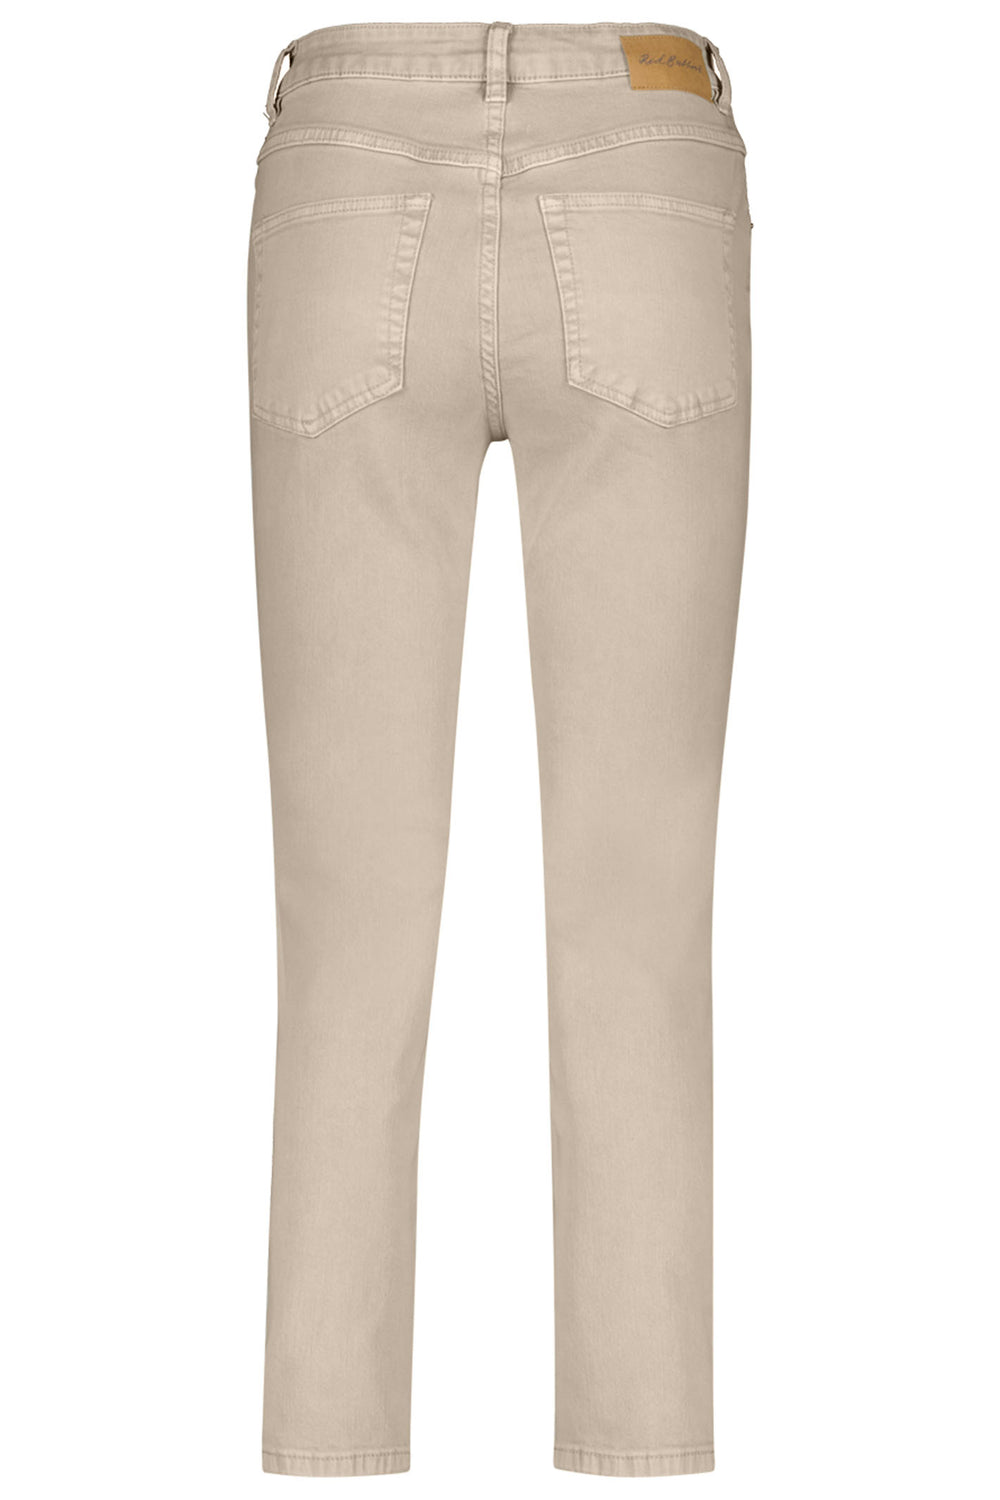 Red Button SRB4157 Tara Pebble Grey Denim Jeans 68cm - Olivia Grace Fashion